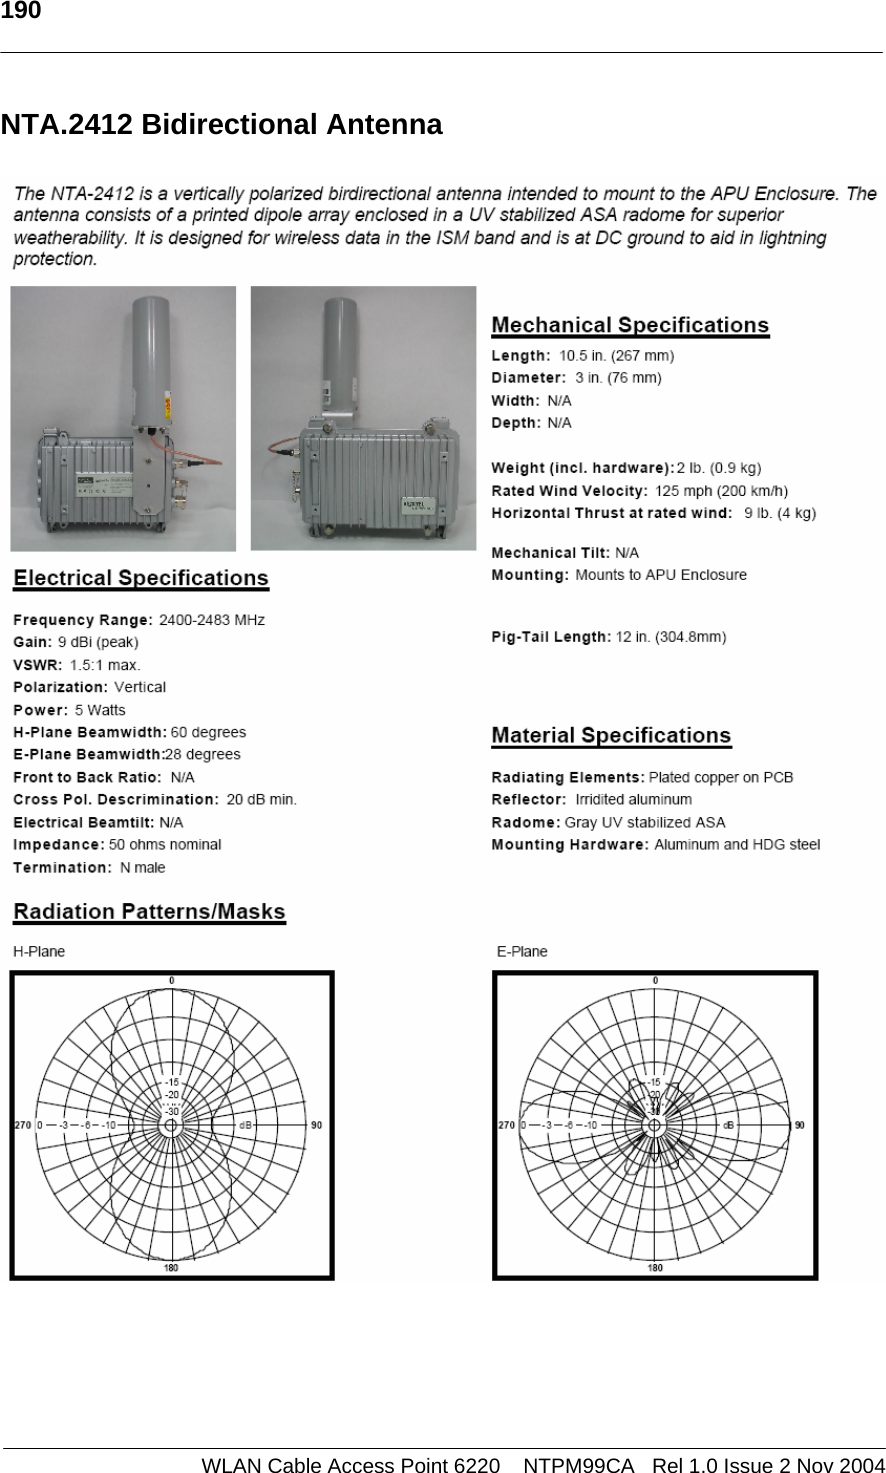   190   WLAN Cable Access Point 6220    NTPM99CA   Rel 1.0 Issue 2 Nov 2004 NTA.2412 Bidirectional Antenna    